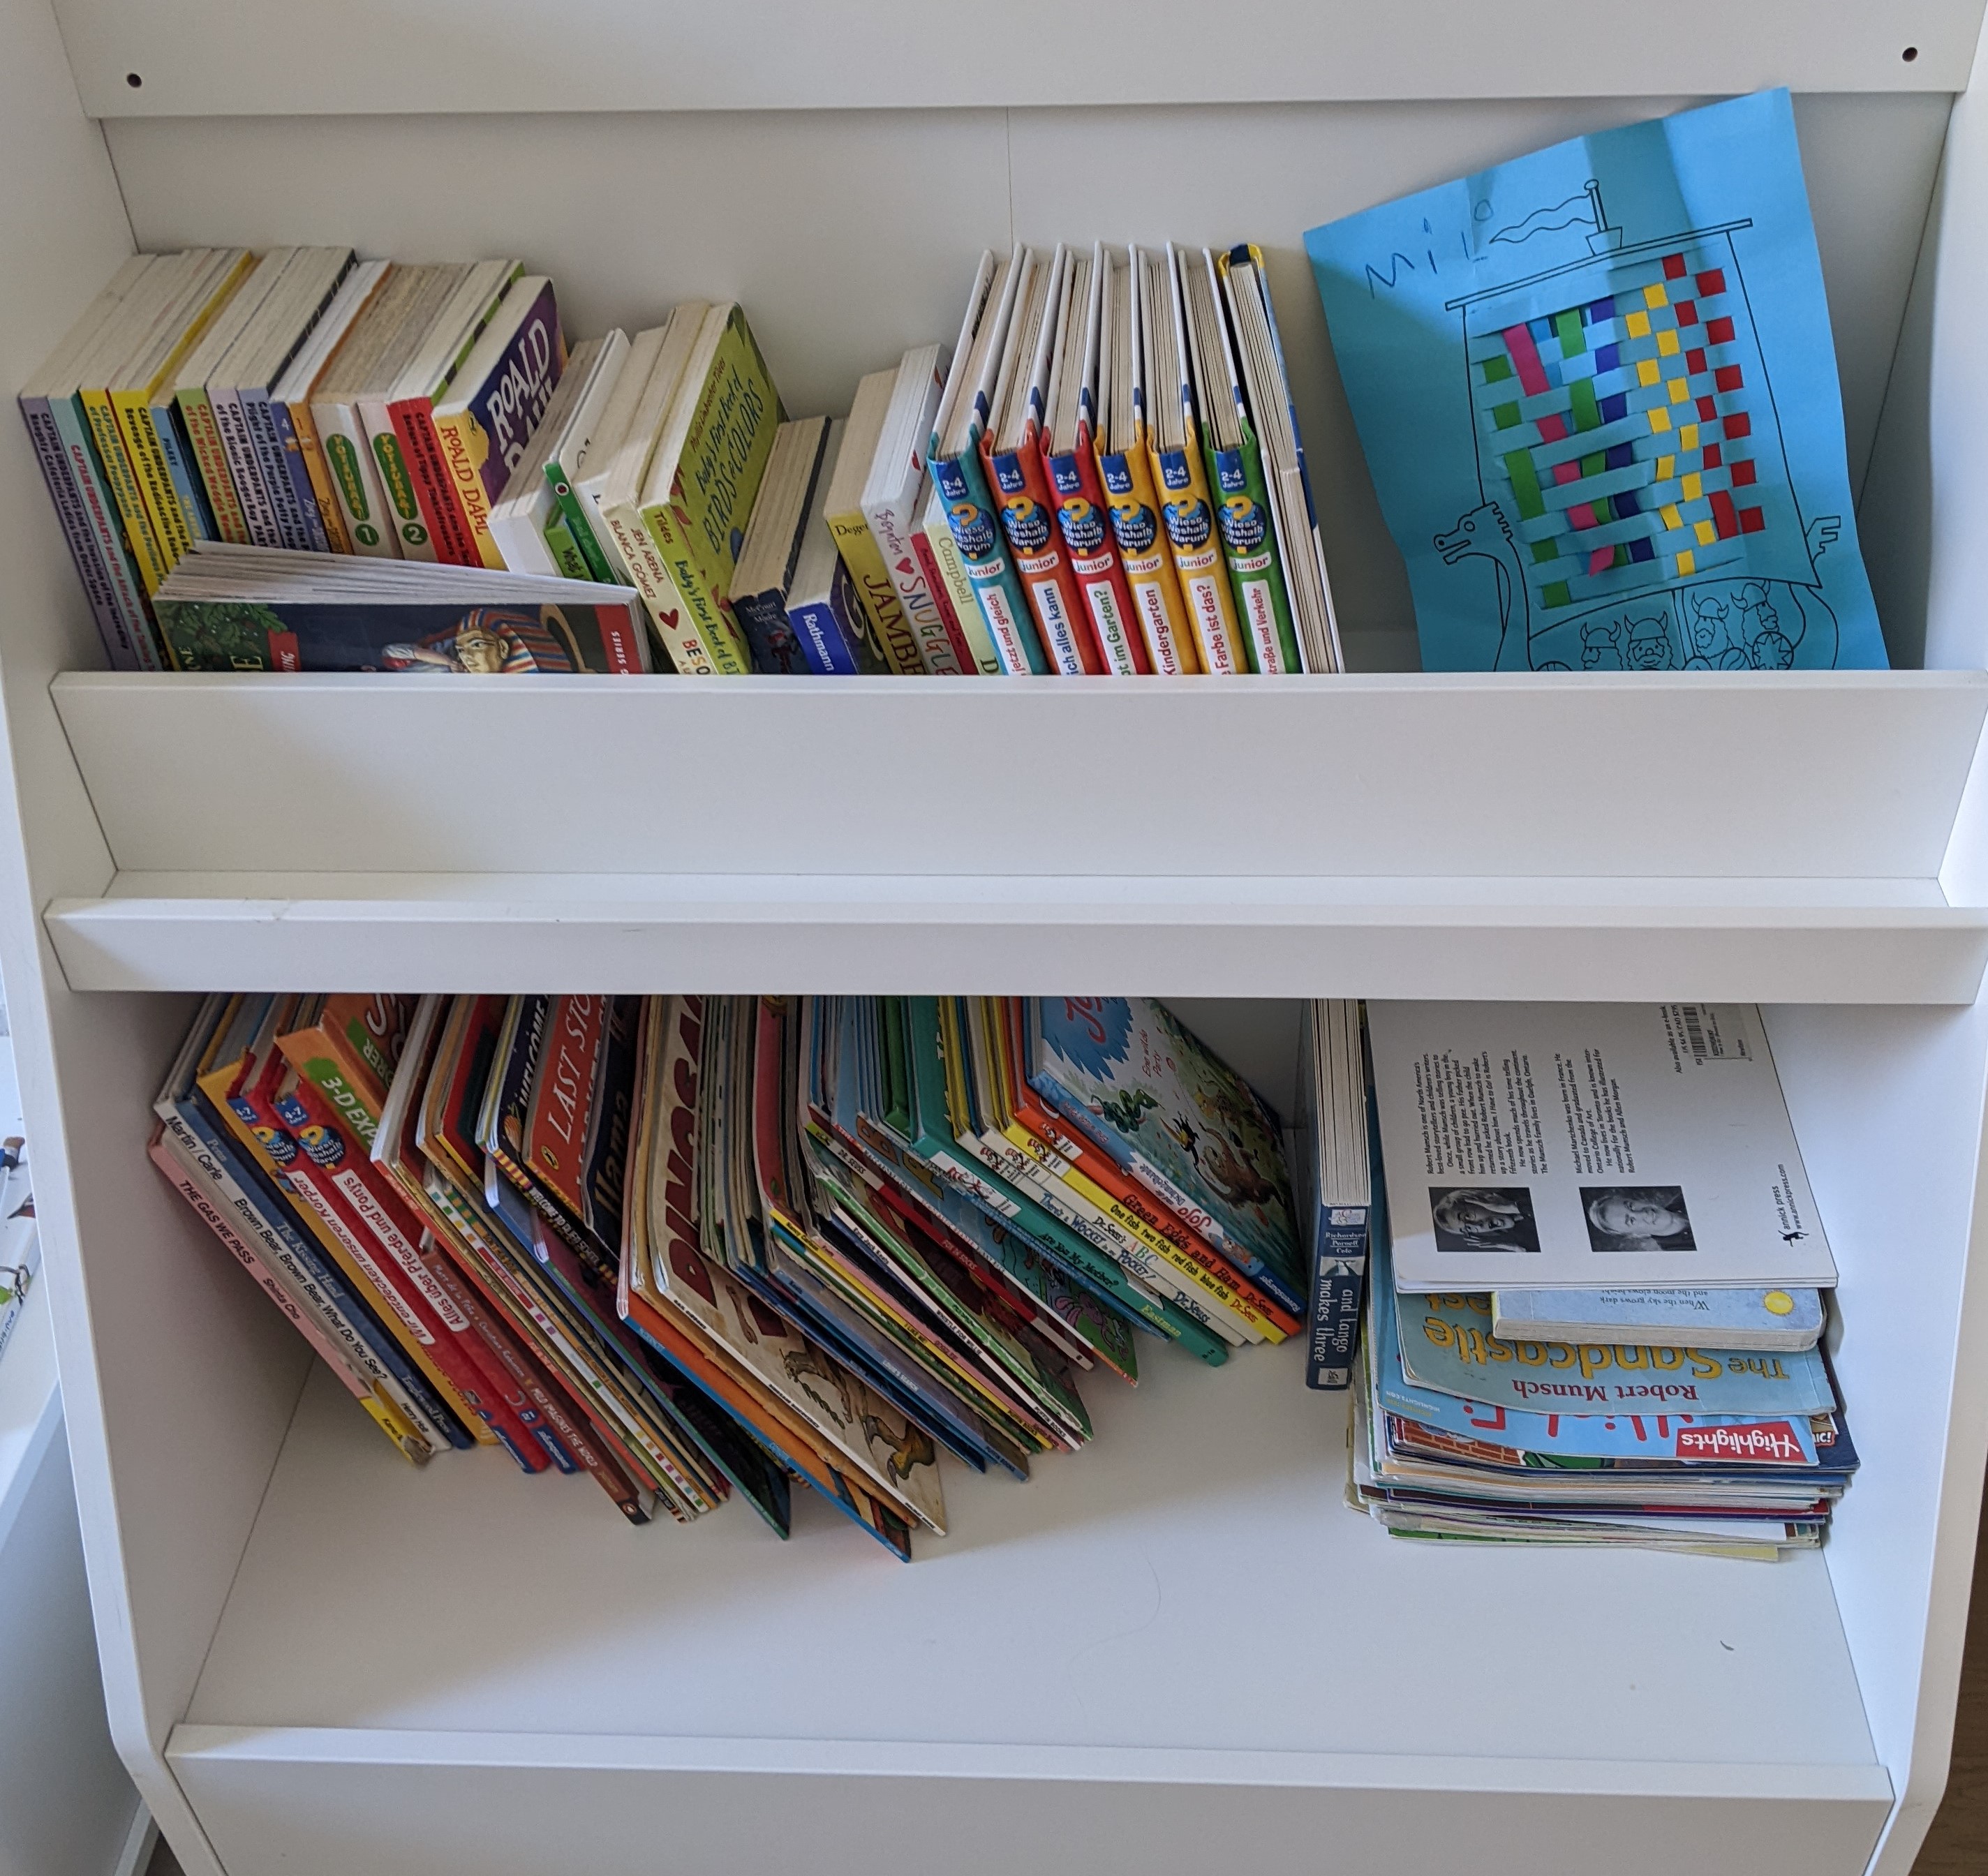 My son's bookshelf